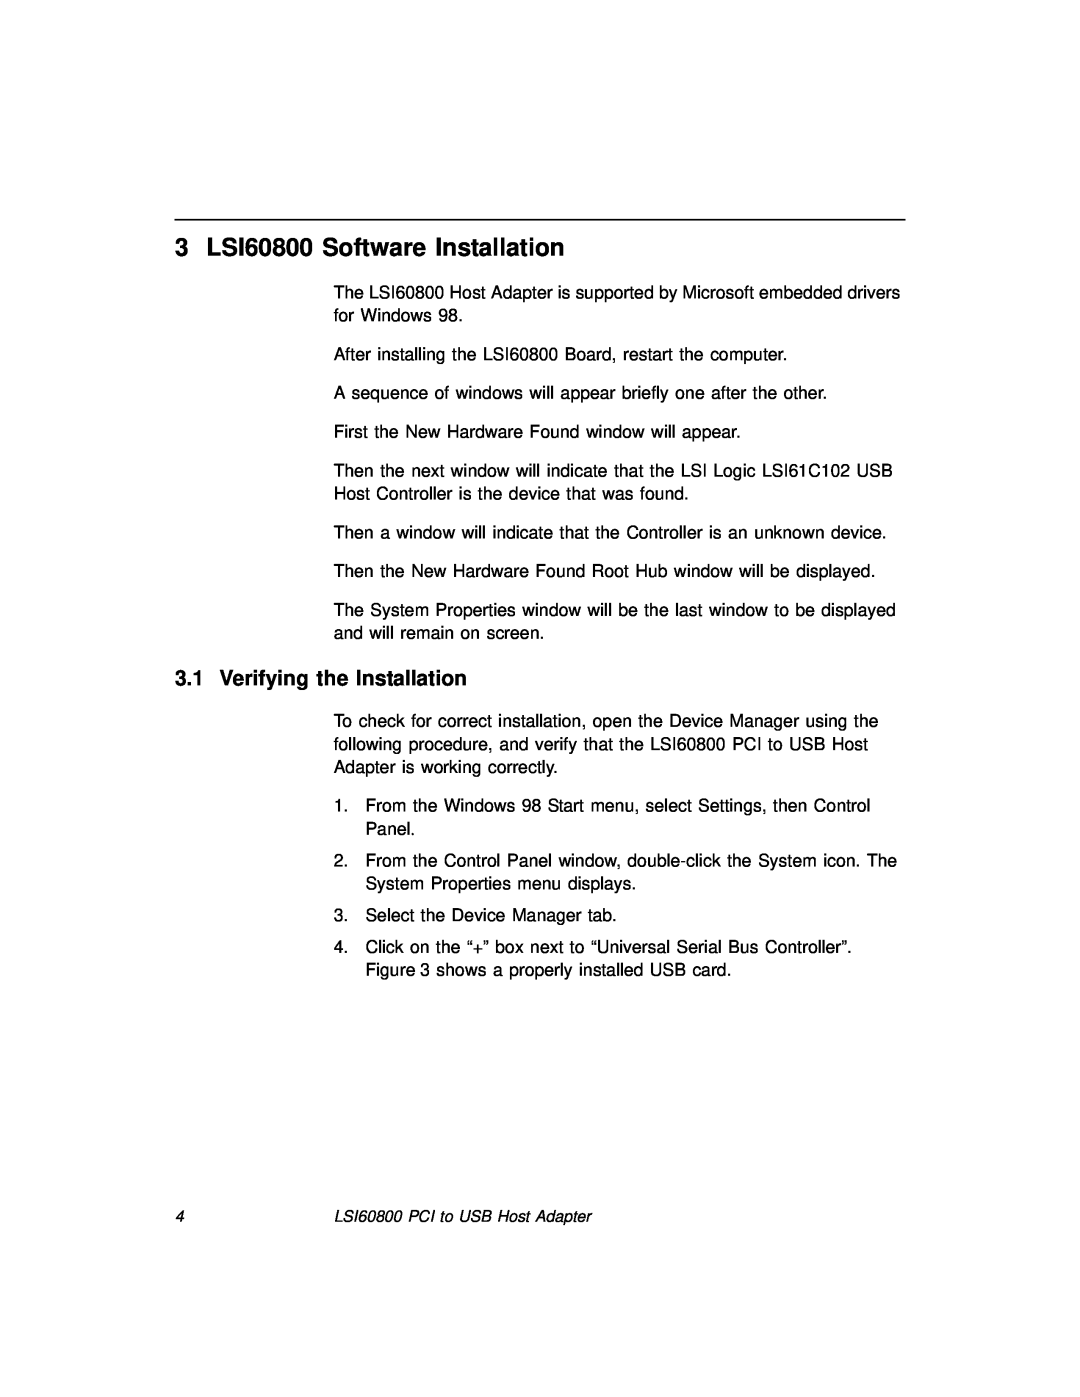 LSI manual 3 LSI60800 Software Installation, Verifying the Installation 